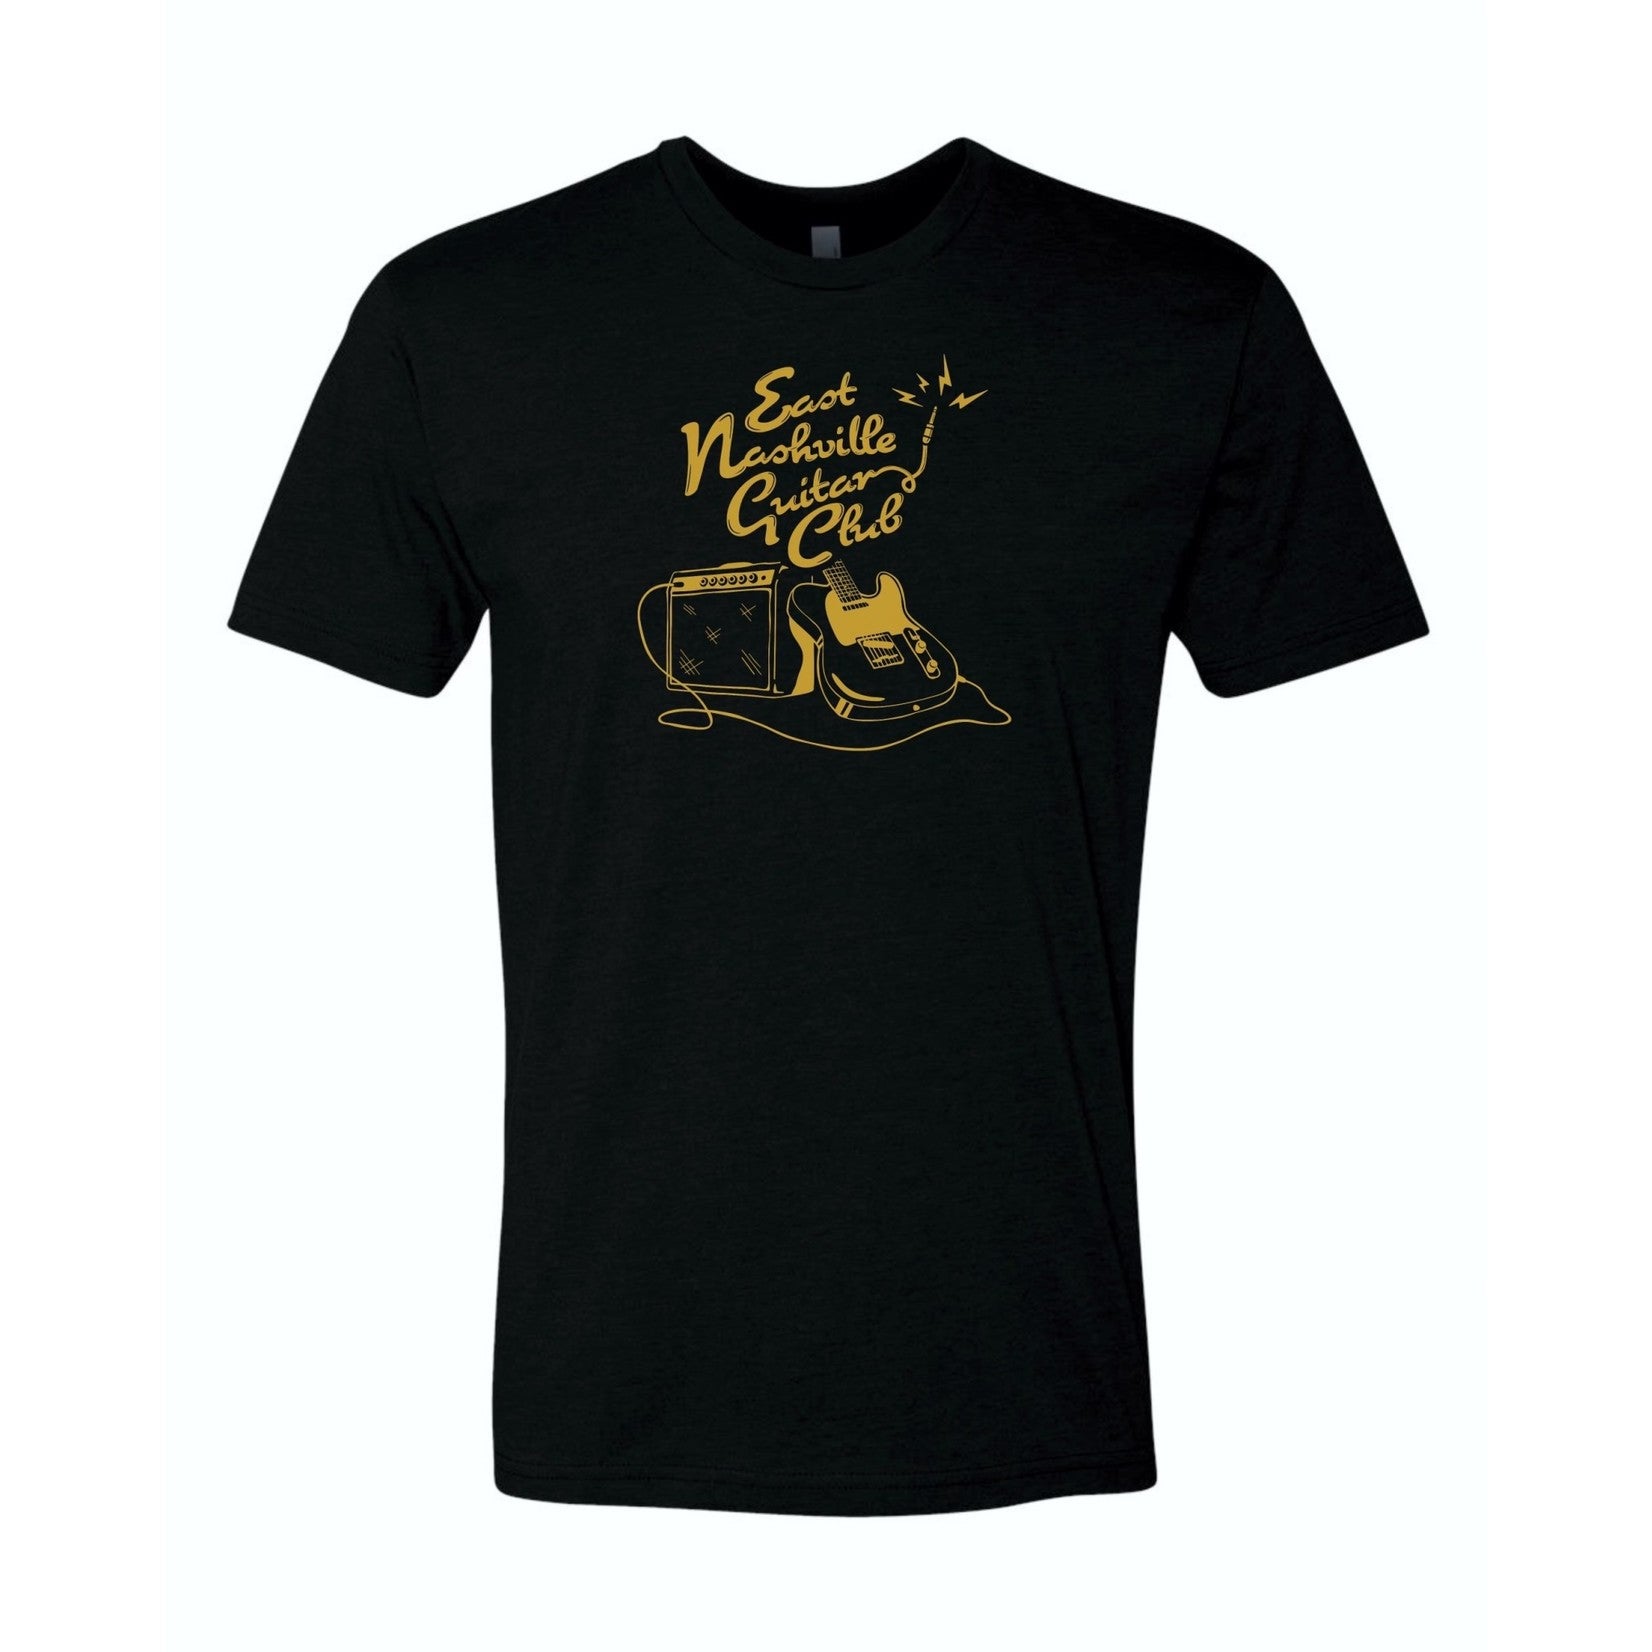 East Nashville Guitar Club T-Shirt